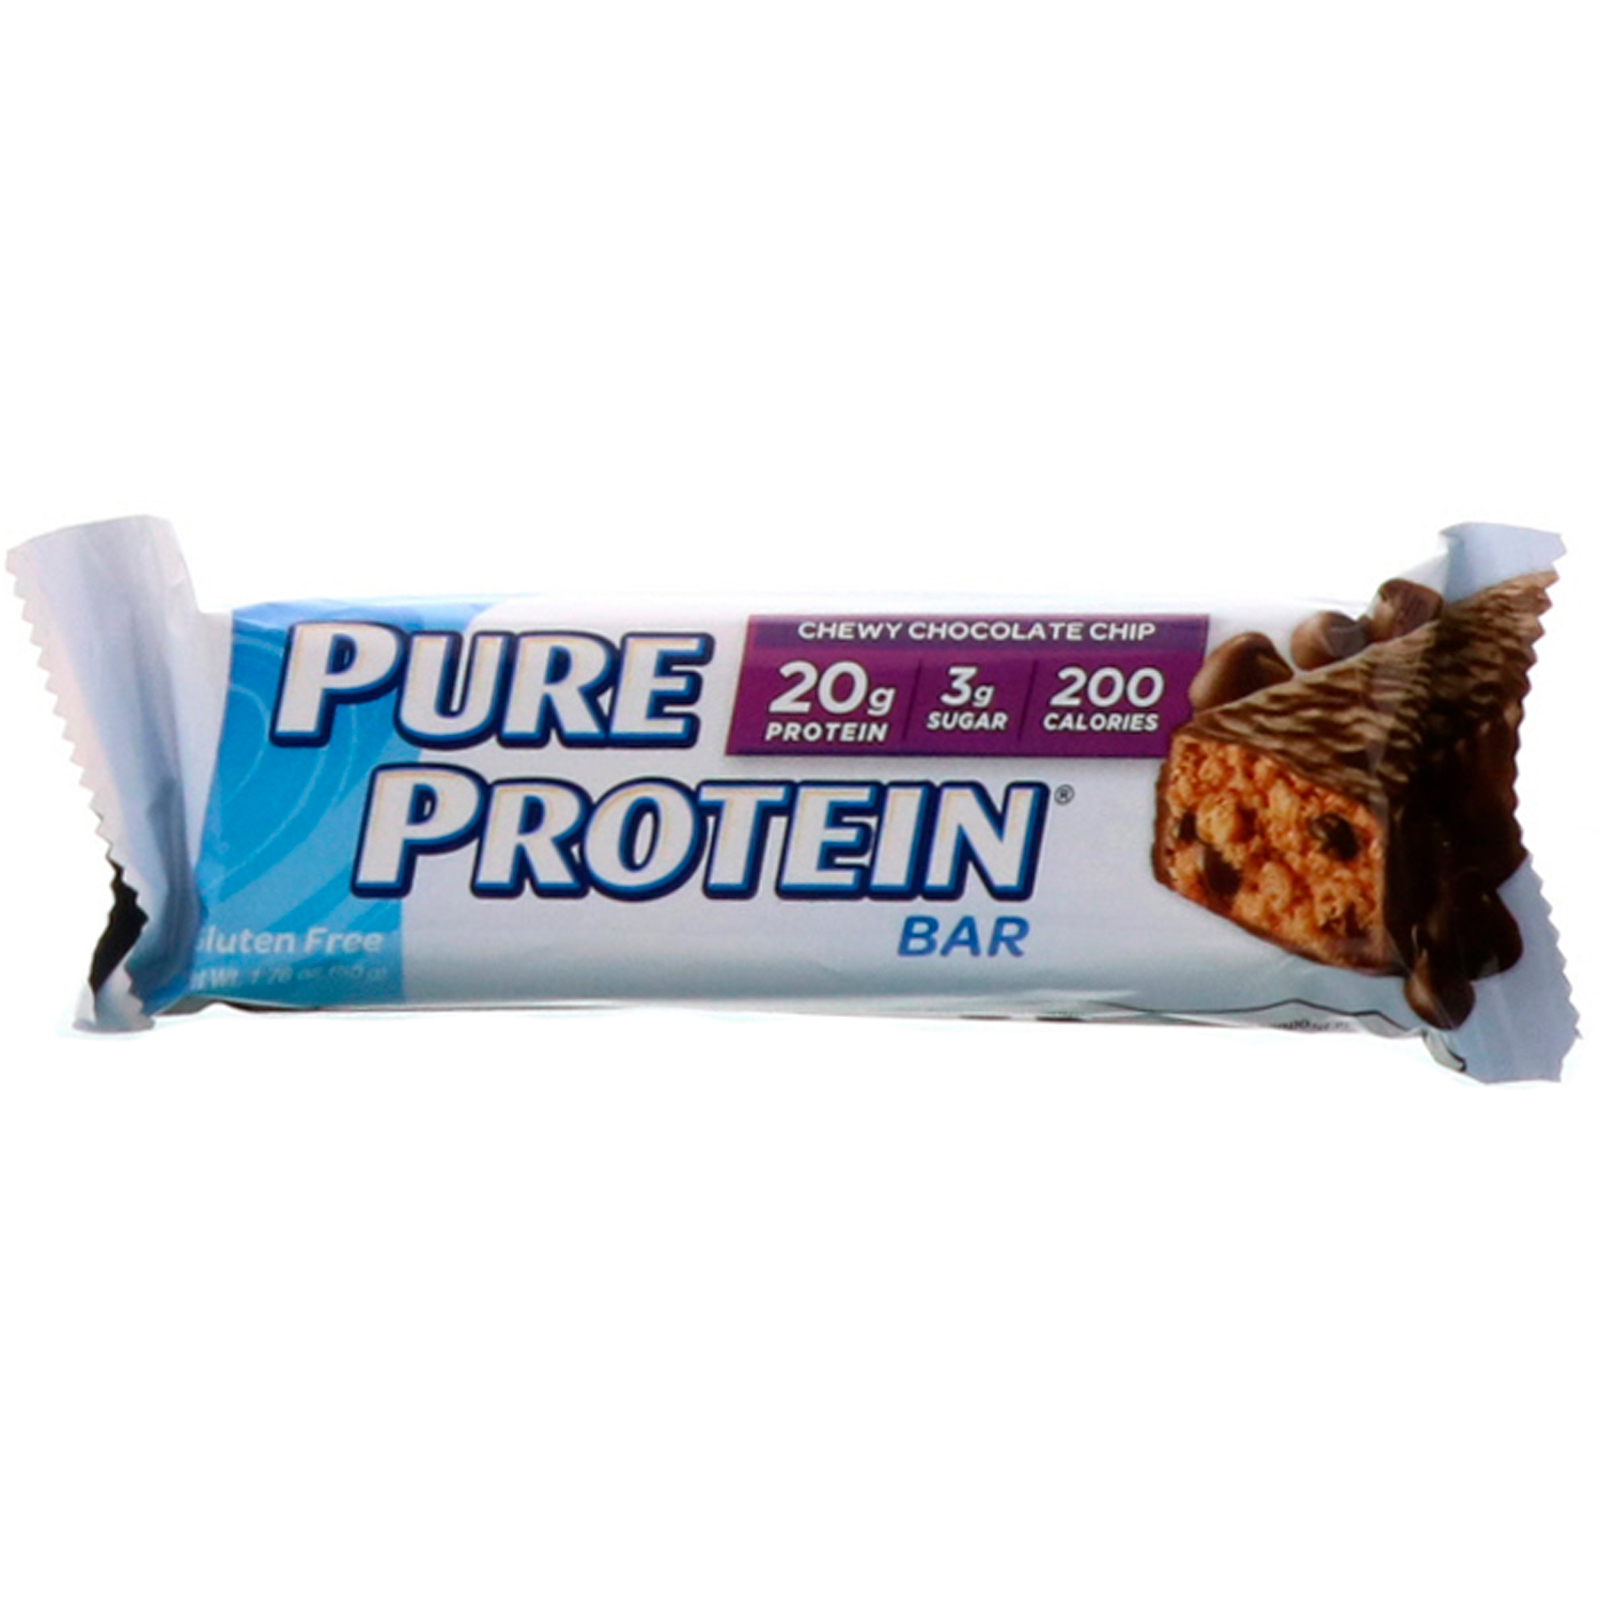 Pure Protein, Chew Chocolate Chip Bar, 6 Bars, 1.76 oz (50 g) Each - iHerb